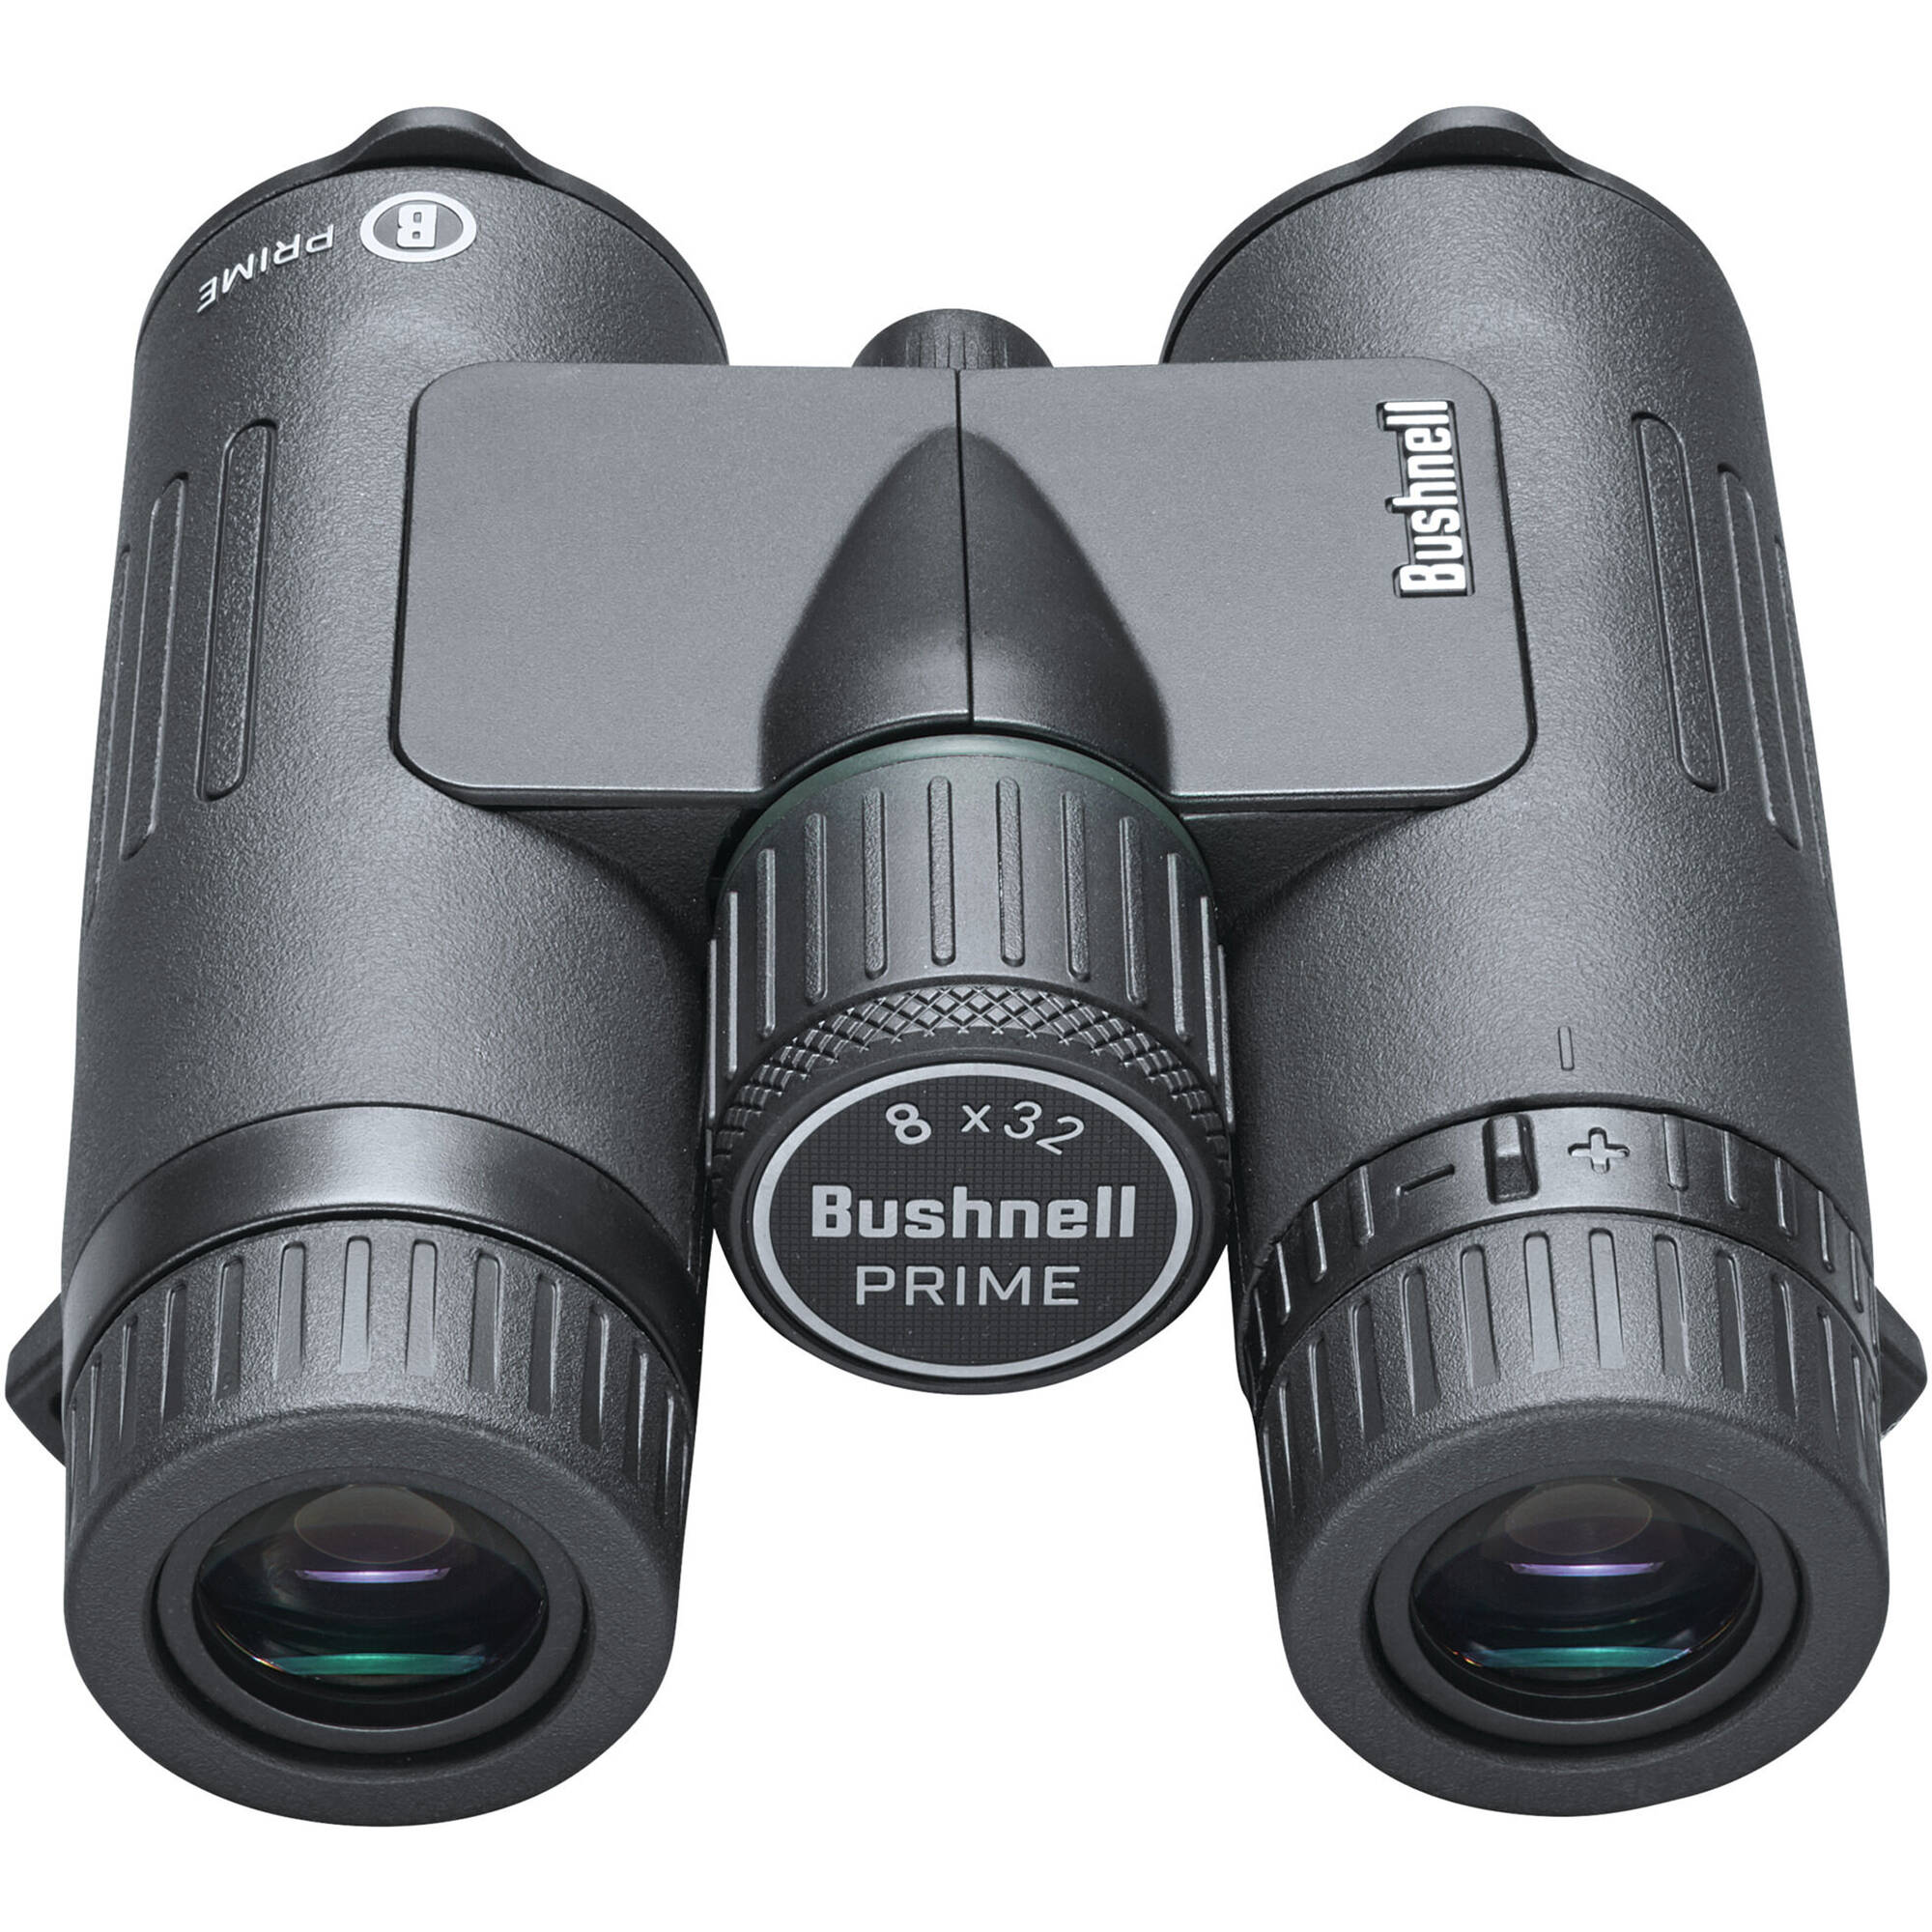 Bushnell 8x32 Prime Waterproof Binoculars